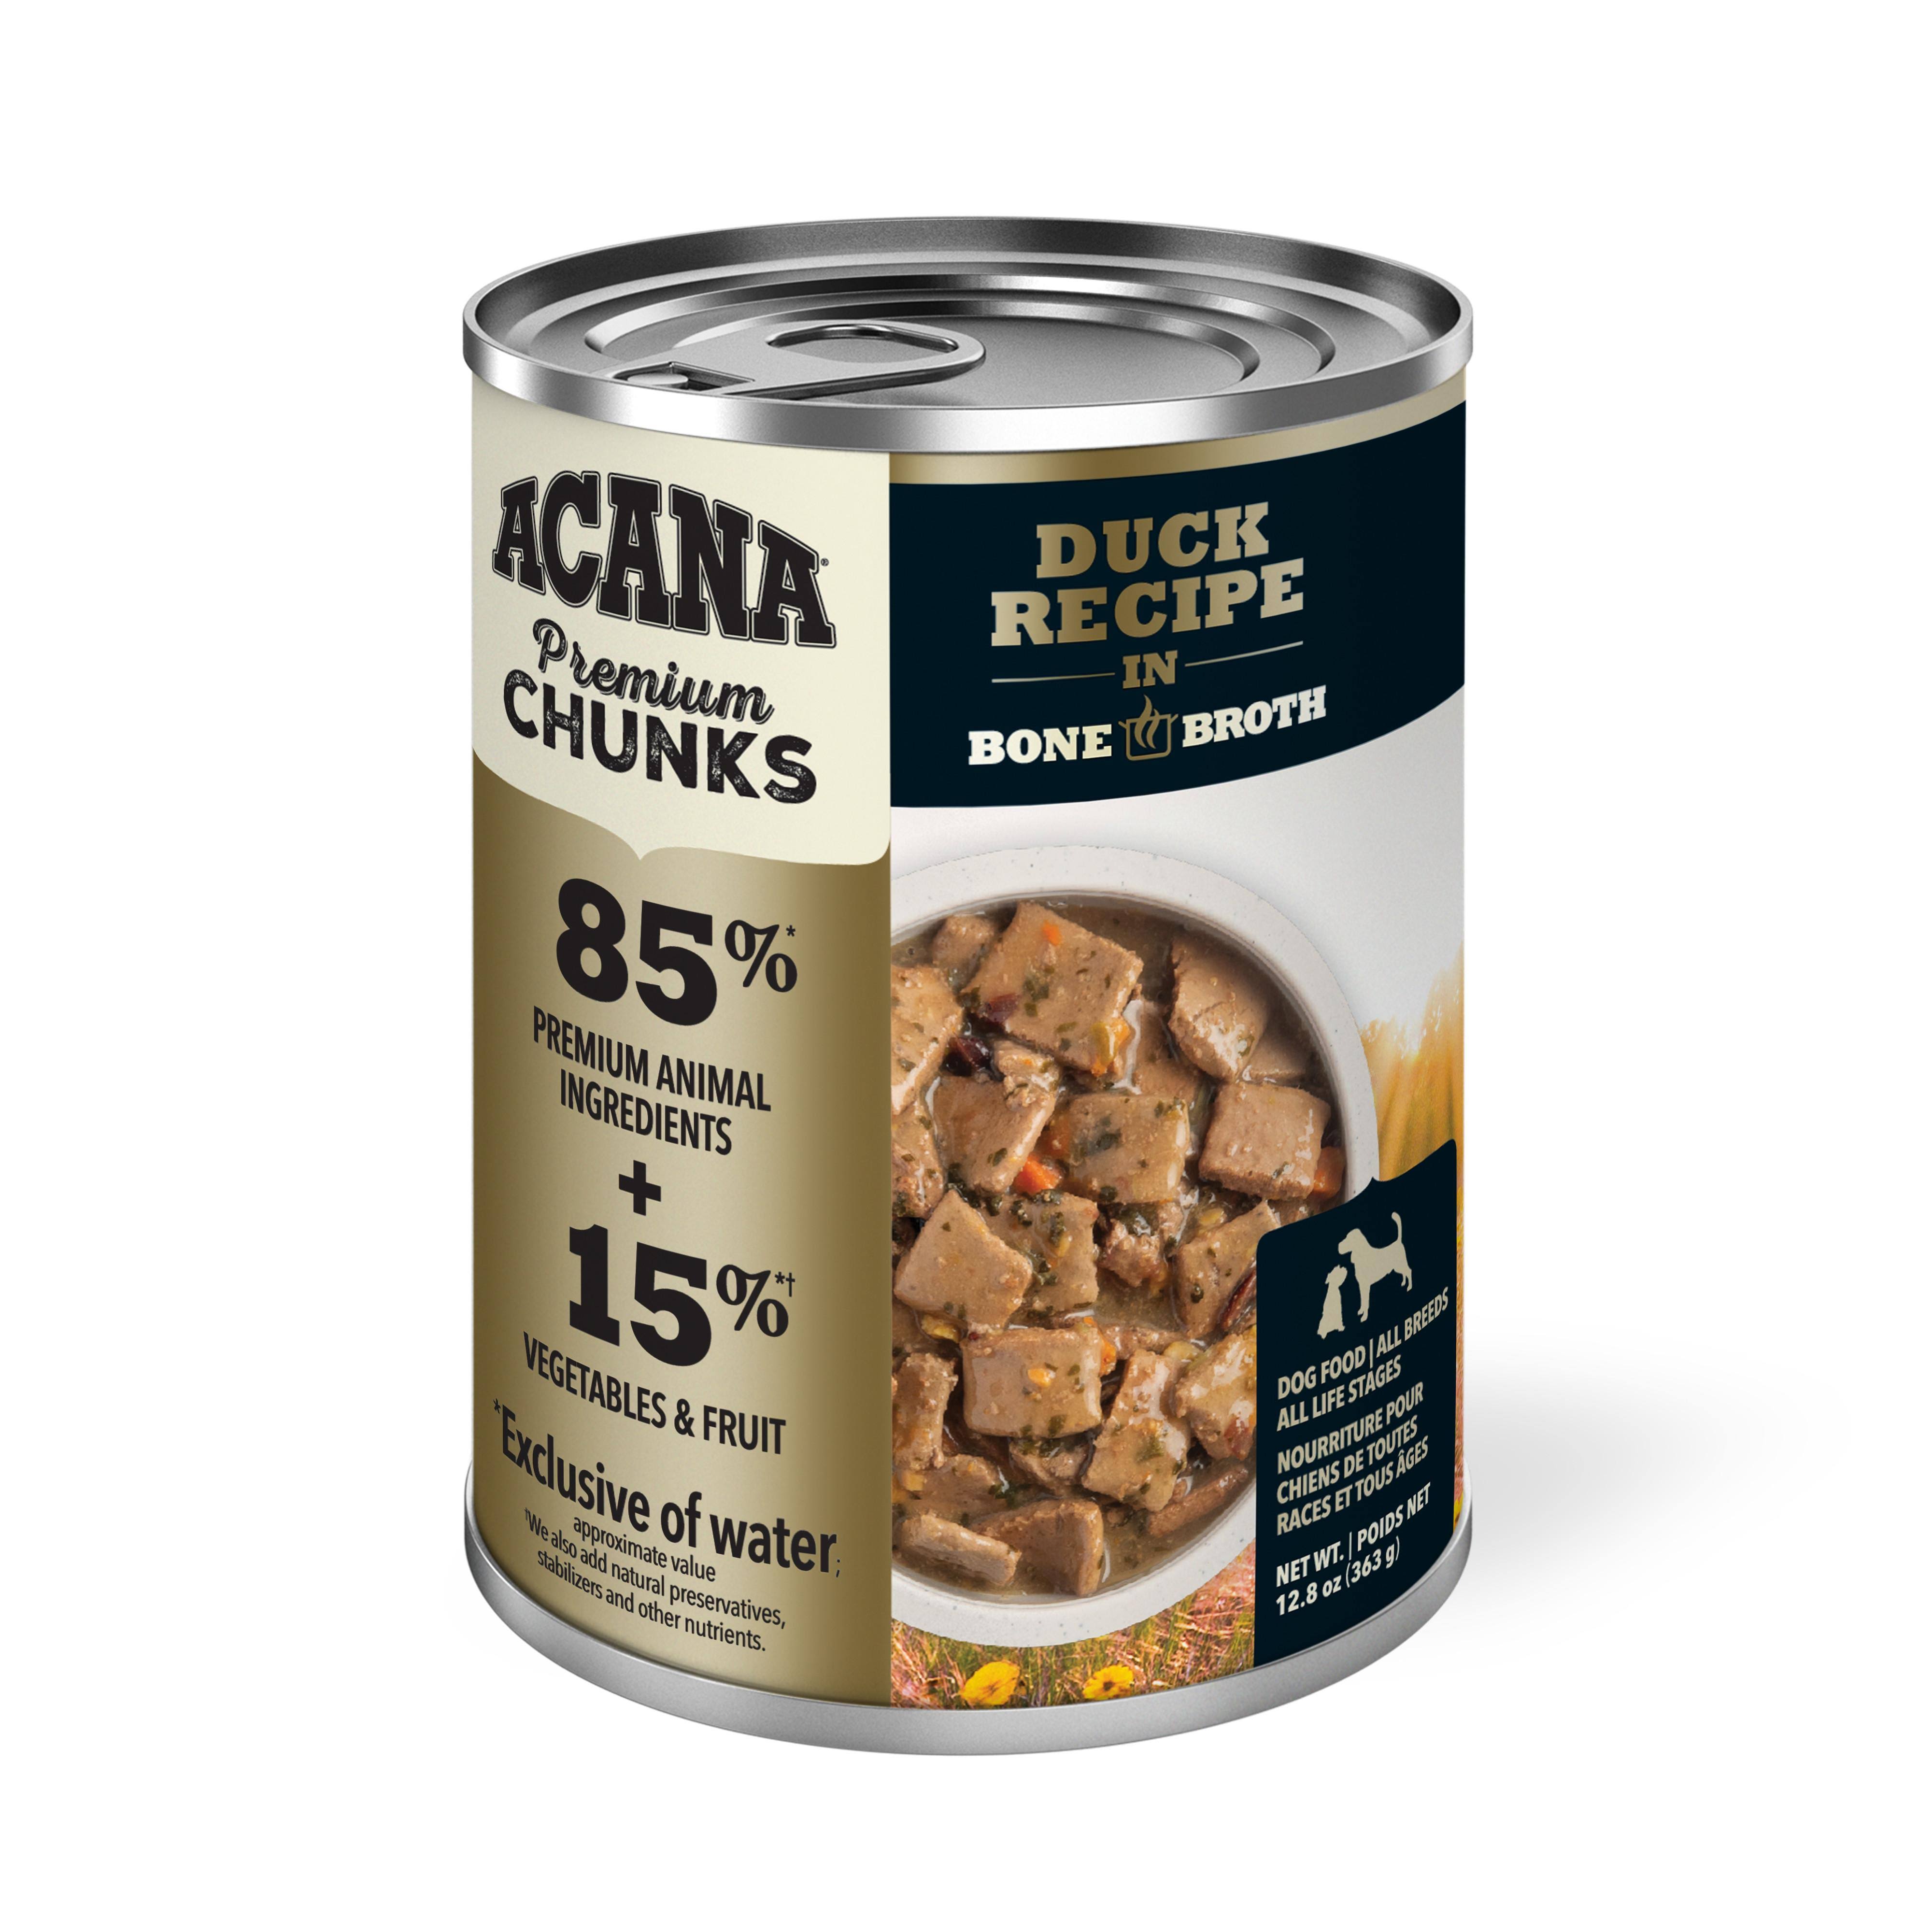 ACANA Premium Chunks Duck Recipe in Bone Broth Dog Food, 12.8-Oz.